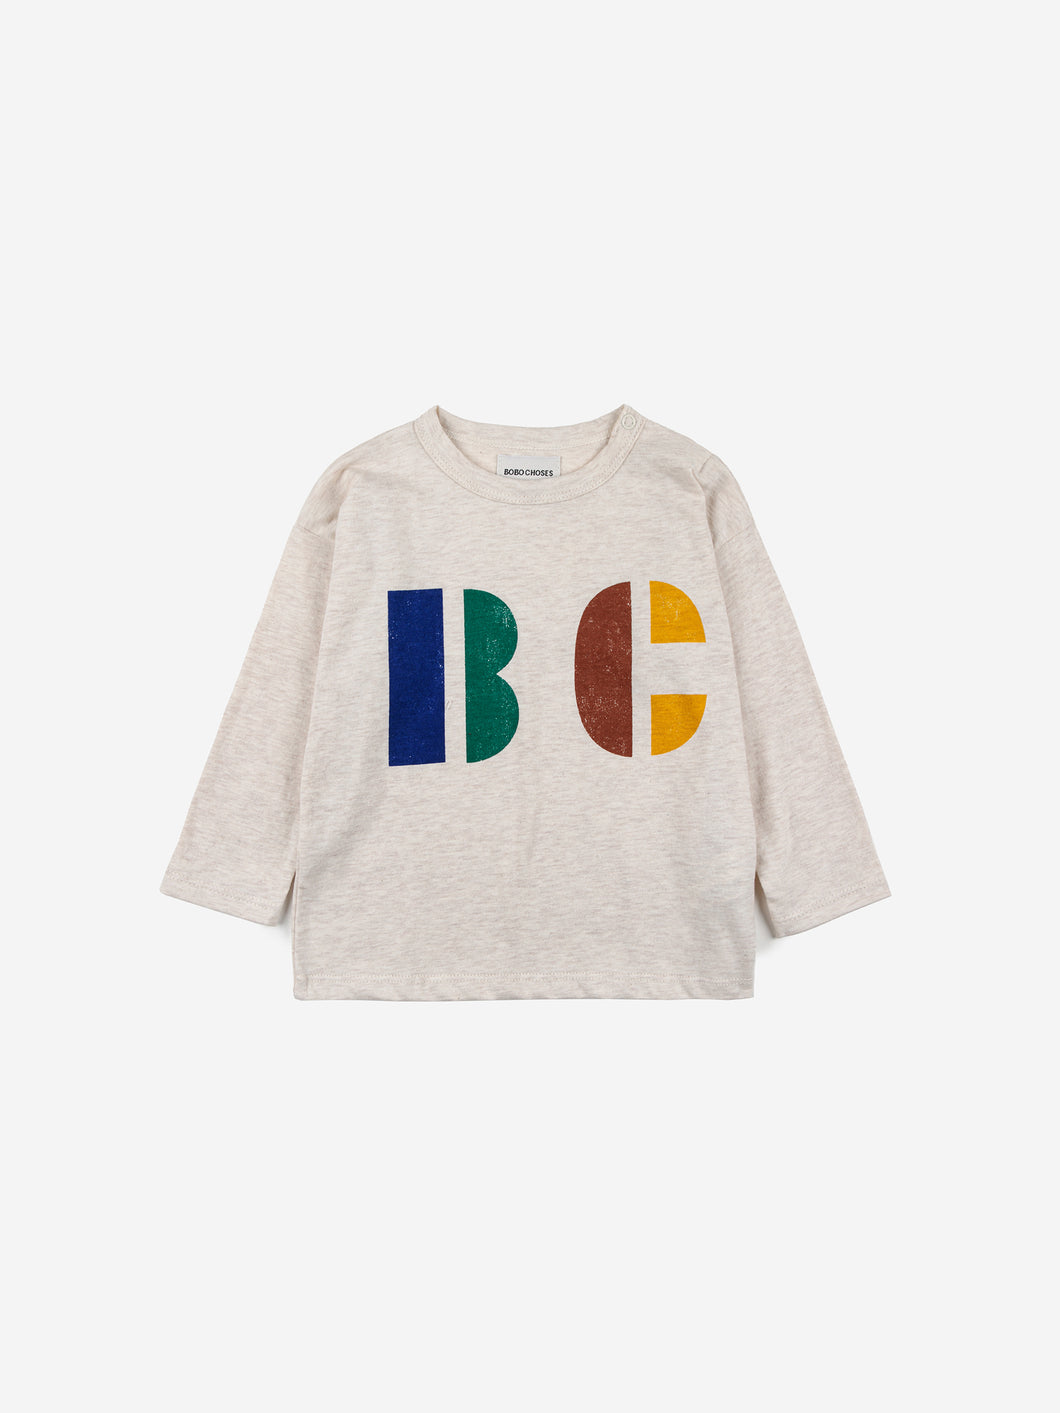 BOBOCHOSES t-shirt bambino in cotone beige stampa B C